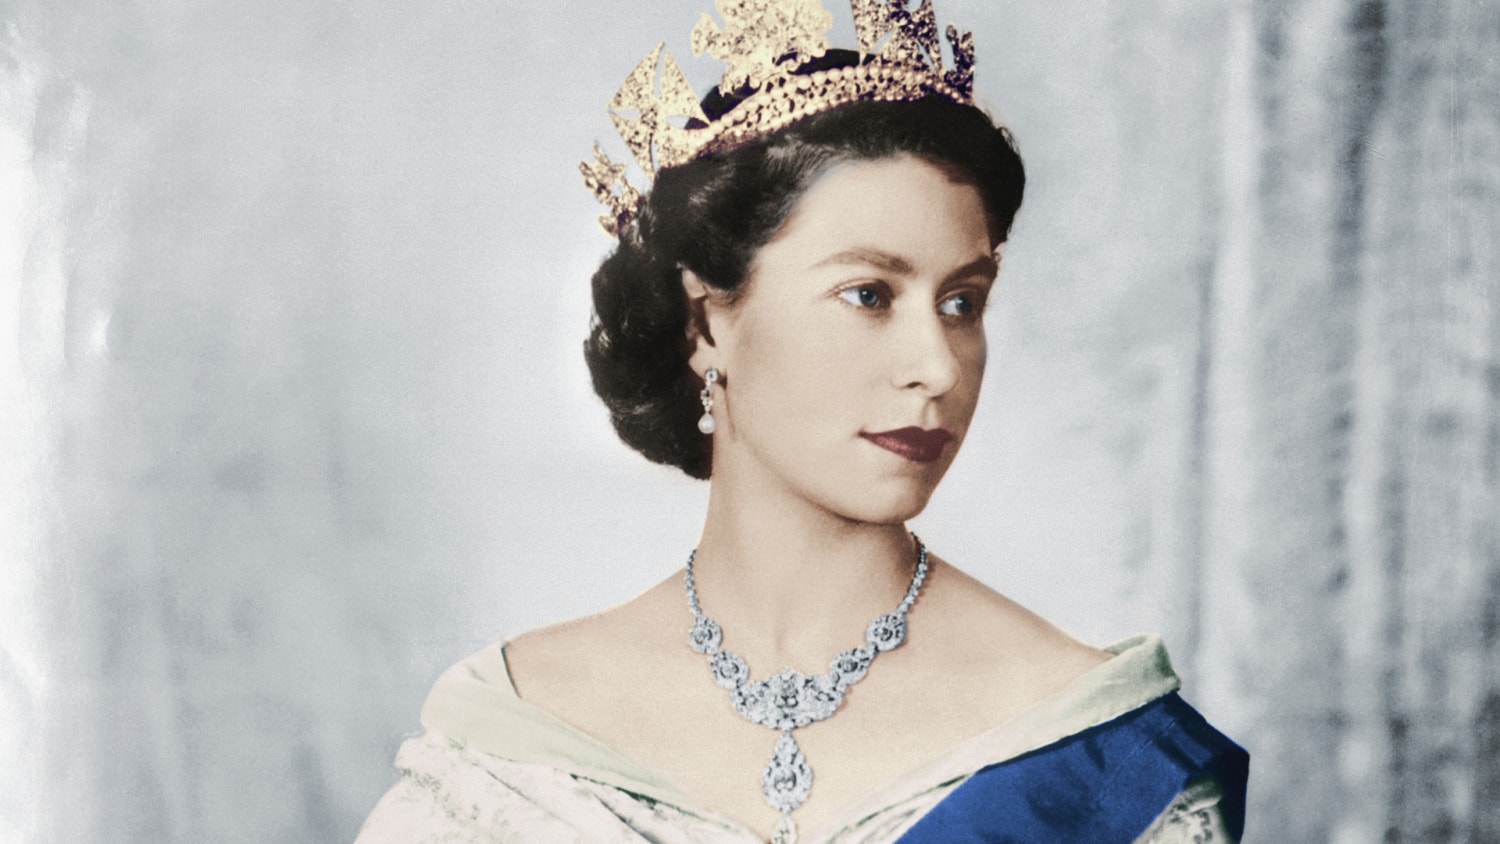 Queen Elizabeth II: Life and legacy of Britain's longest-serving monarch